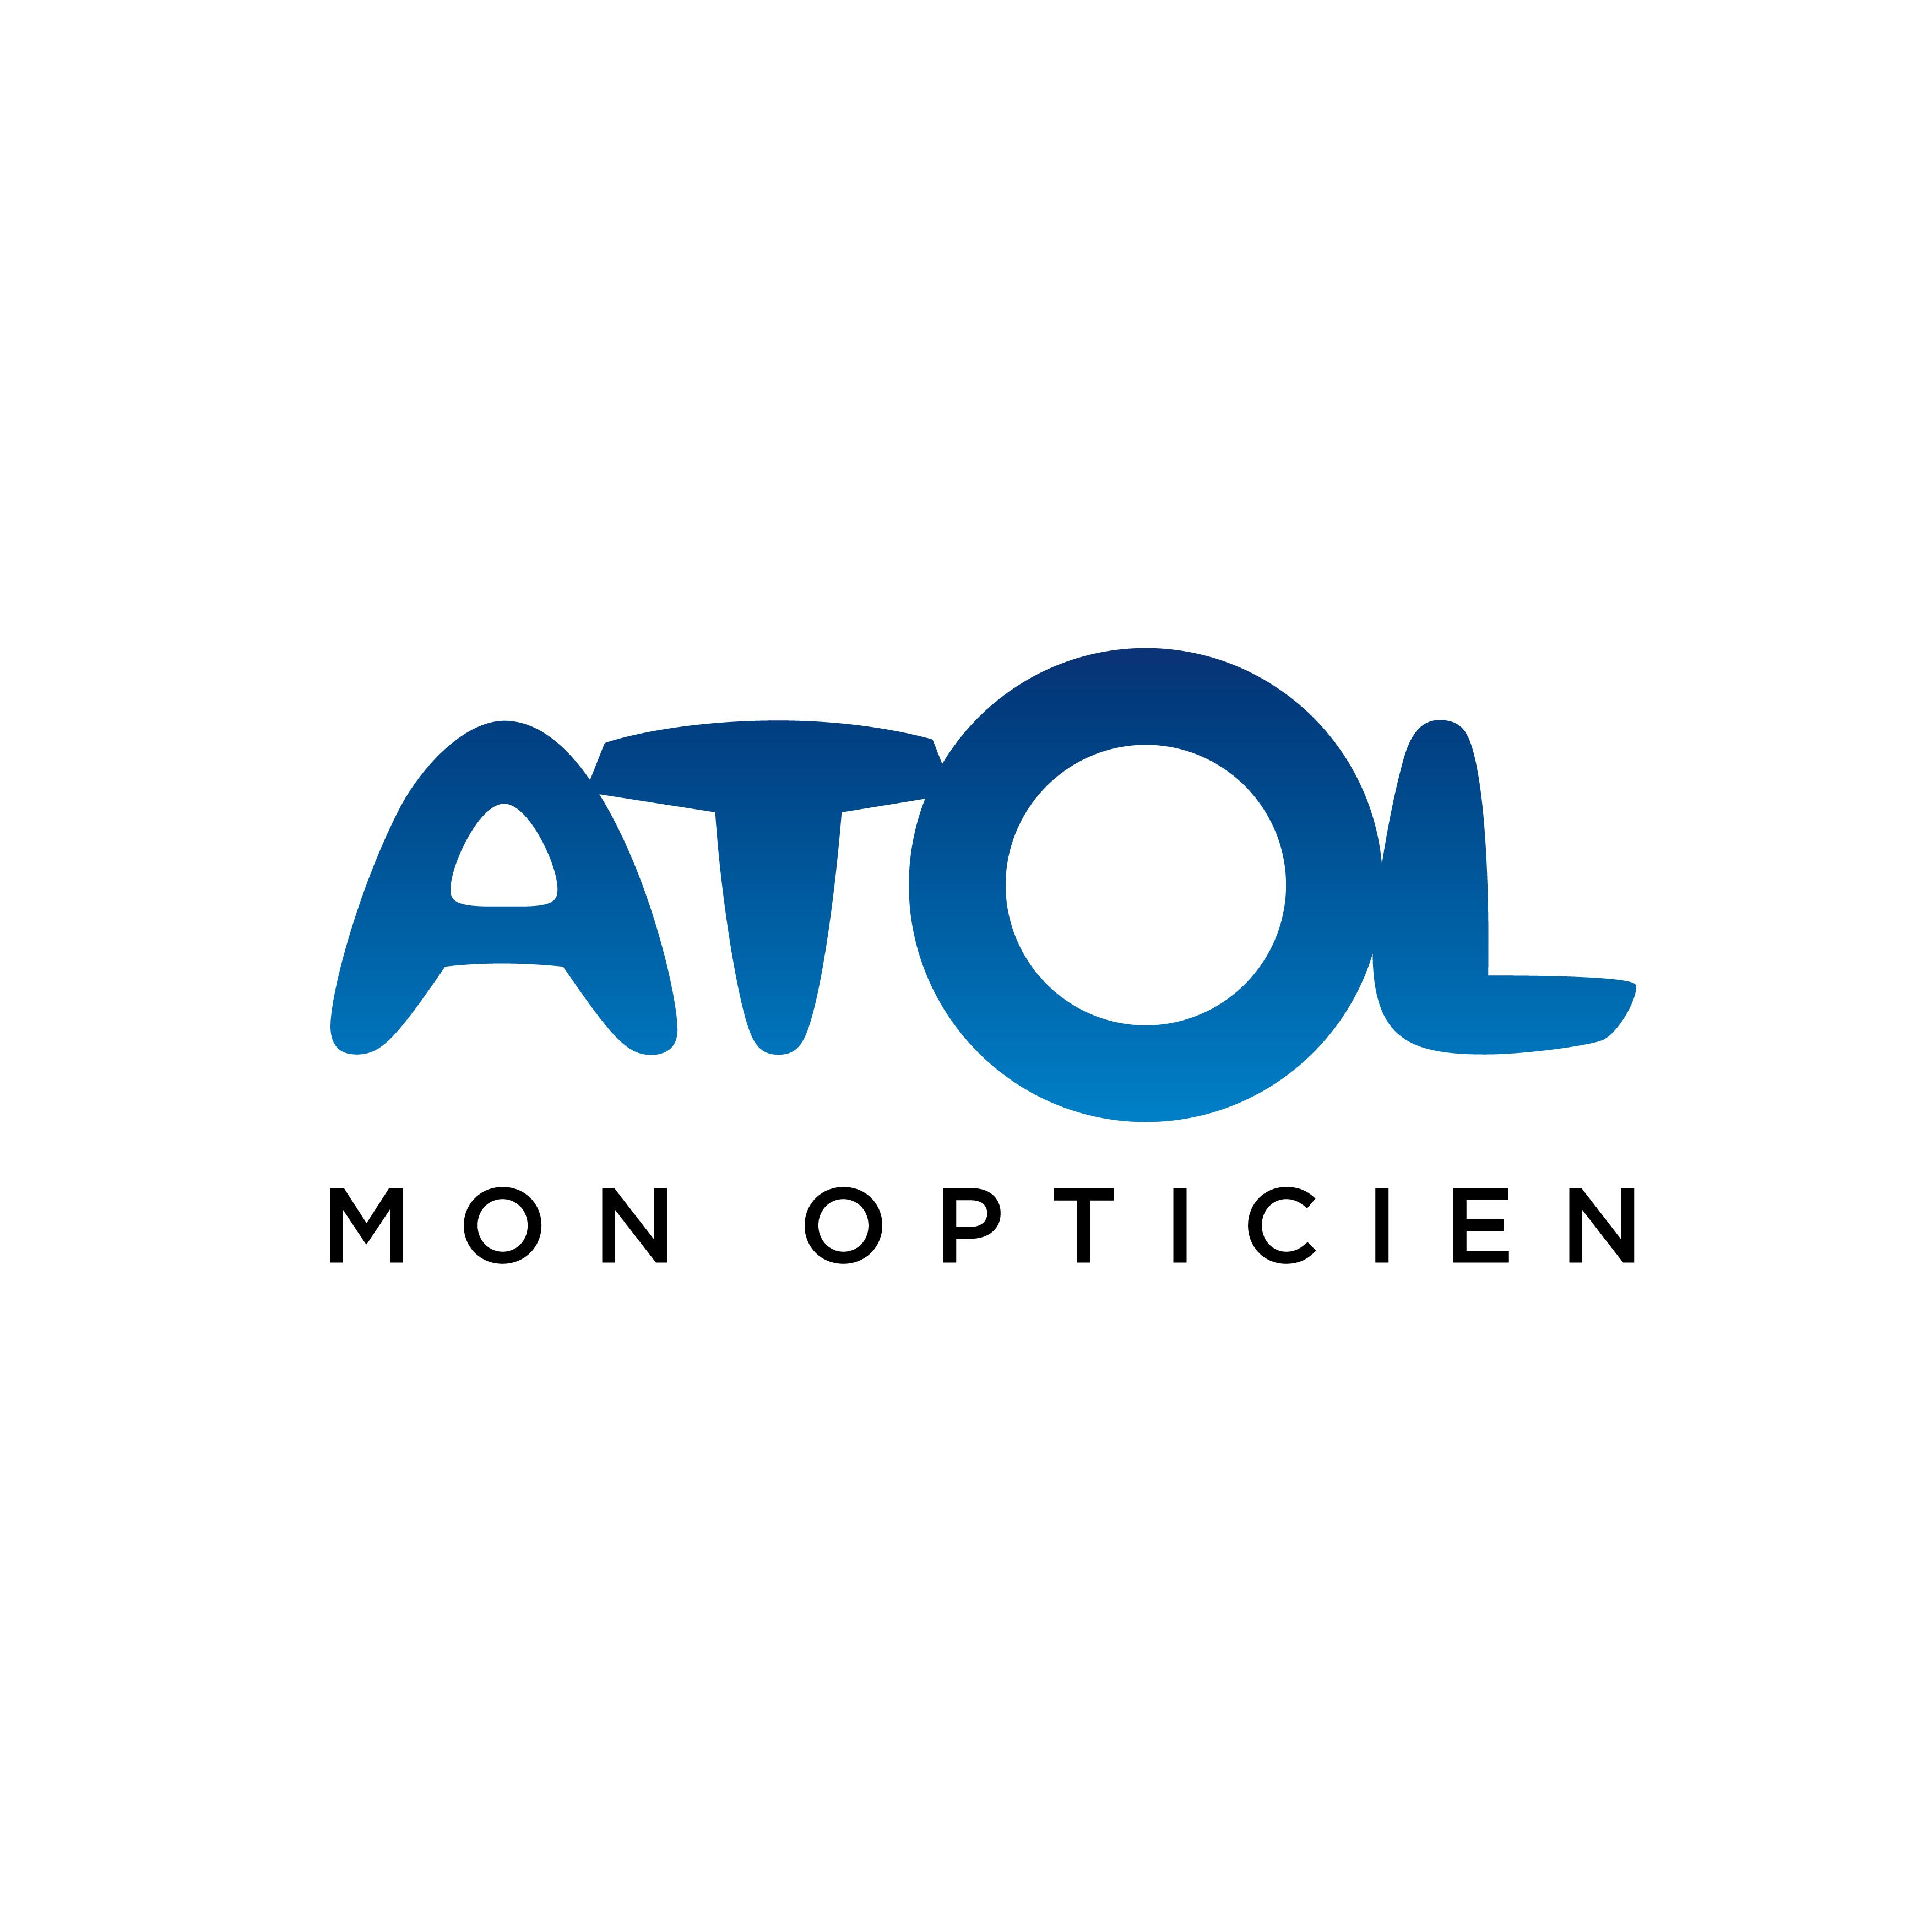 Atol Mon Opticien Neuilly Sur Marne